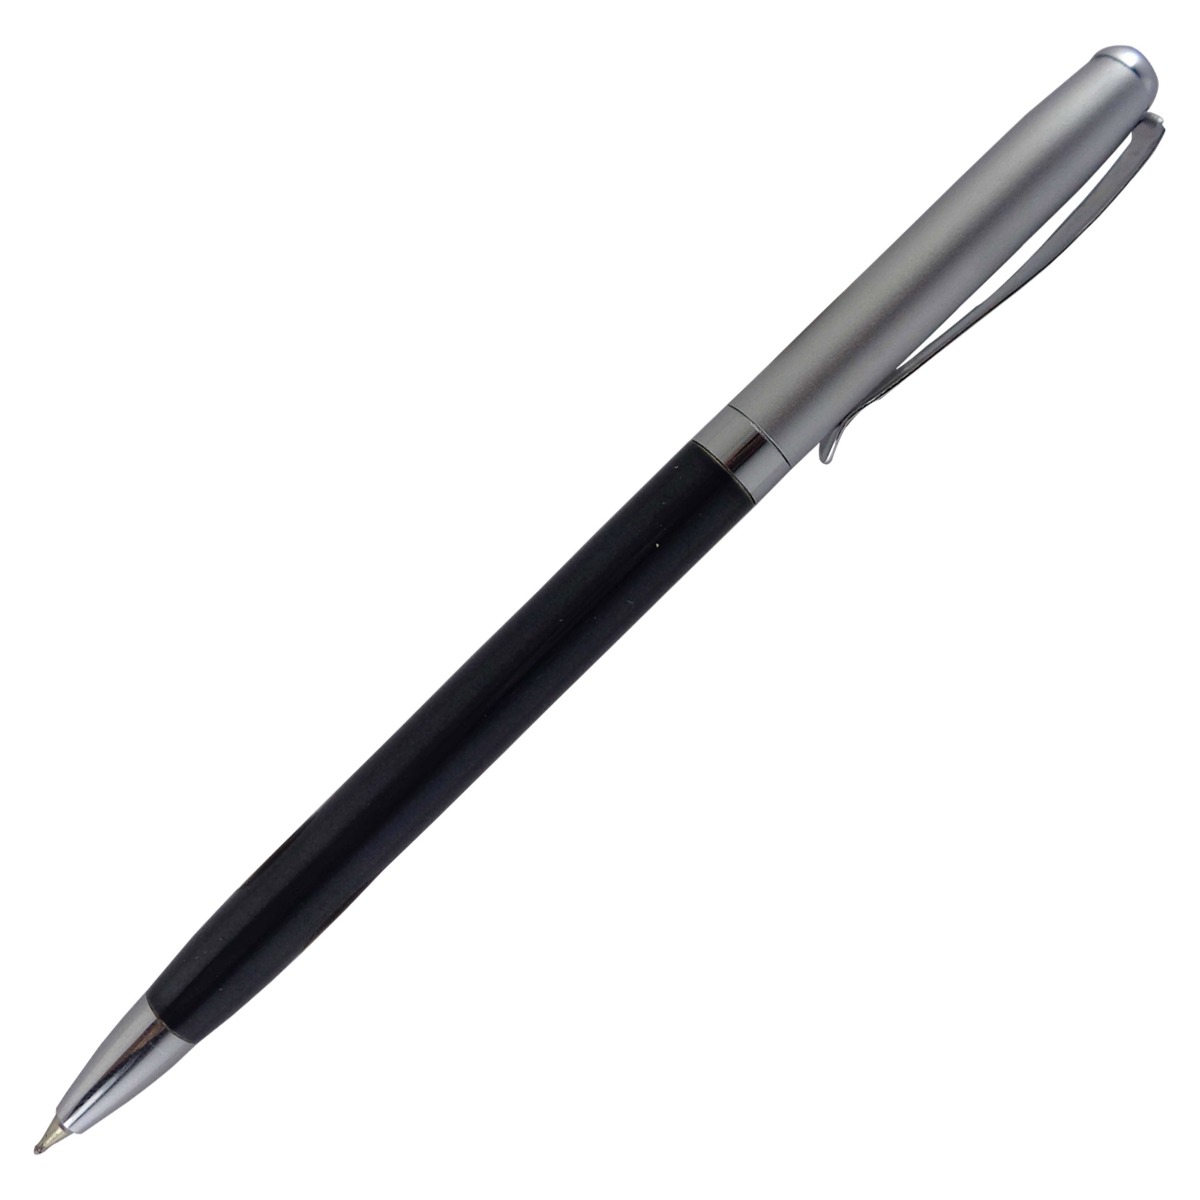 Penhouse.in Model: 13517 slim short black color body with silver cap Twist type medium Tip ball pen